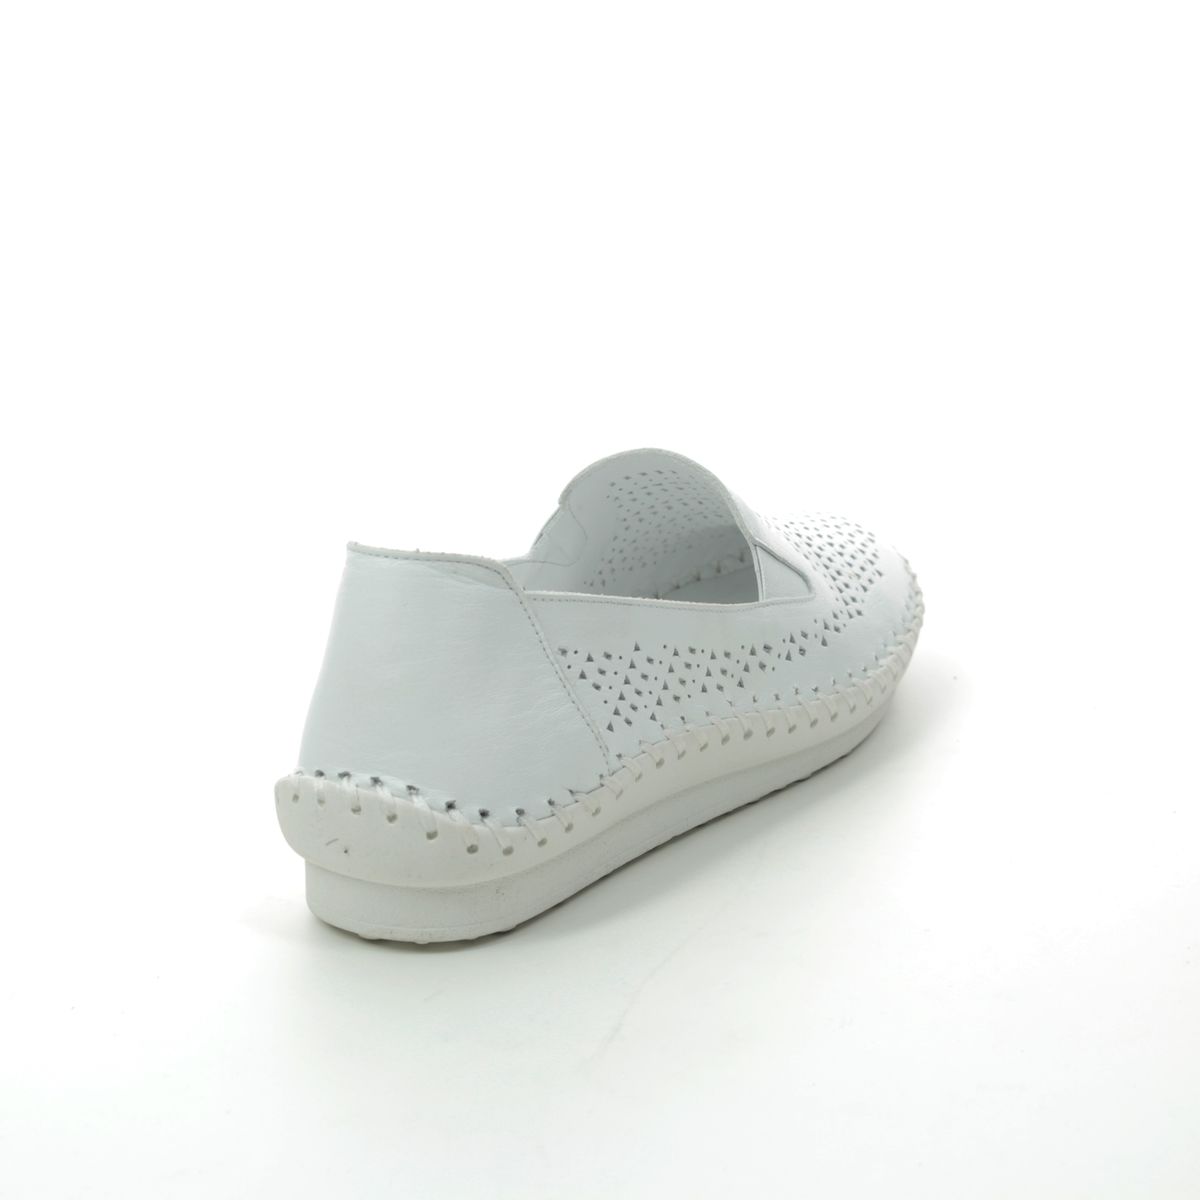 Roselli Gemma 2020-24 White Leather Comfort Slip On Shoes